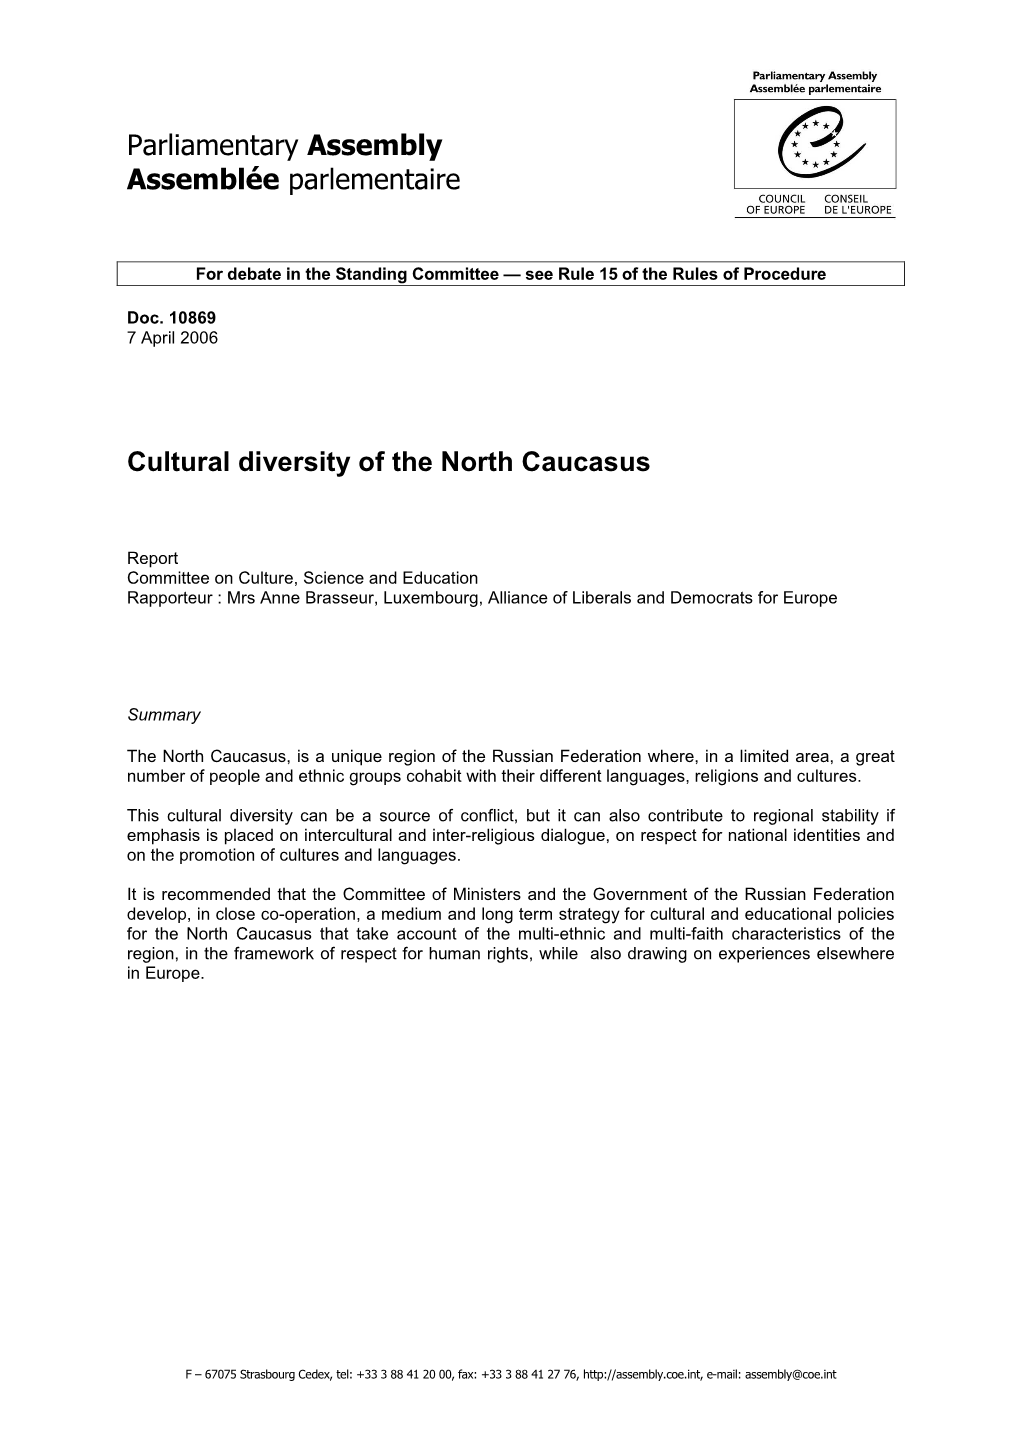 Cultural Diversity of the North Caucasus